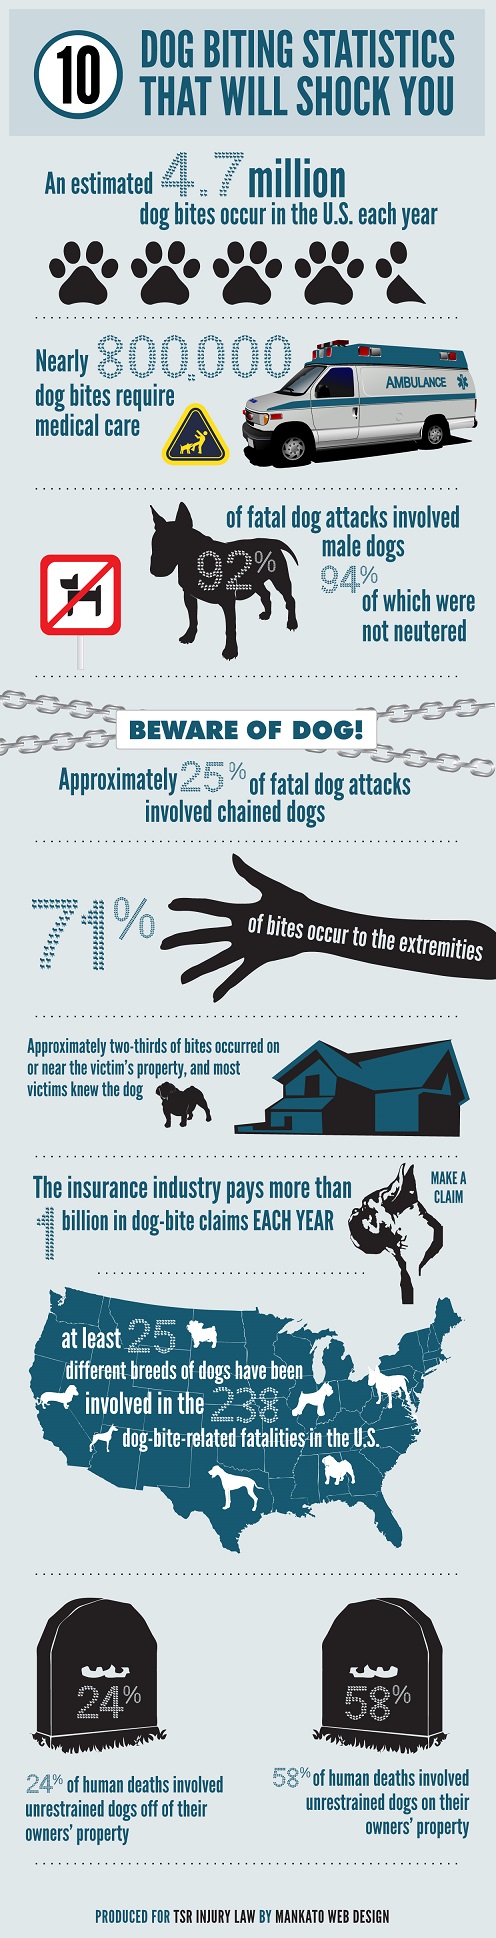 10 Dog Biting Statistics That Will Shock You